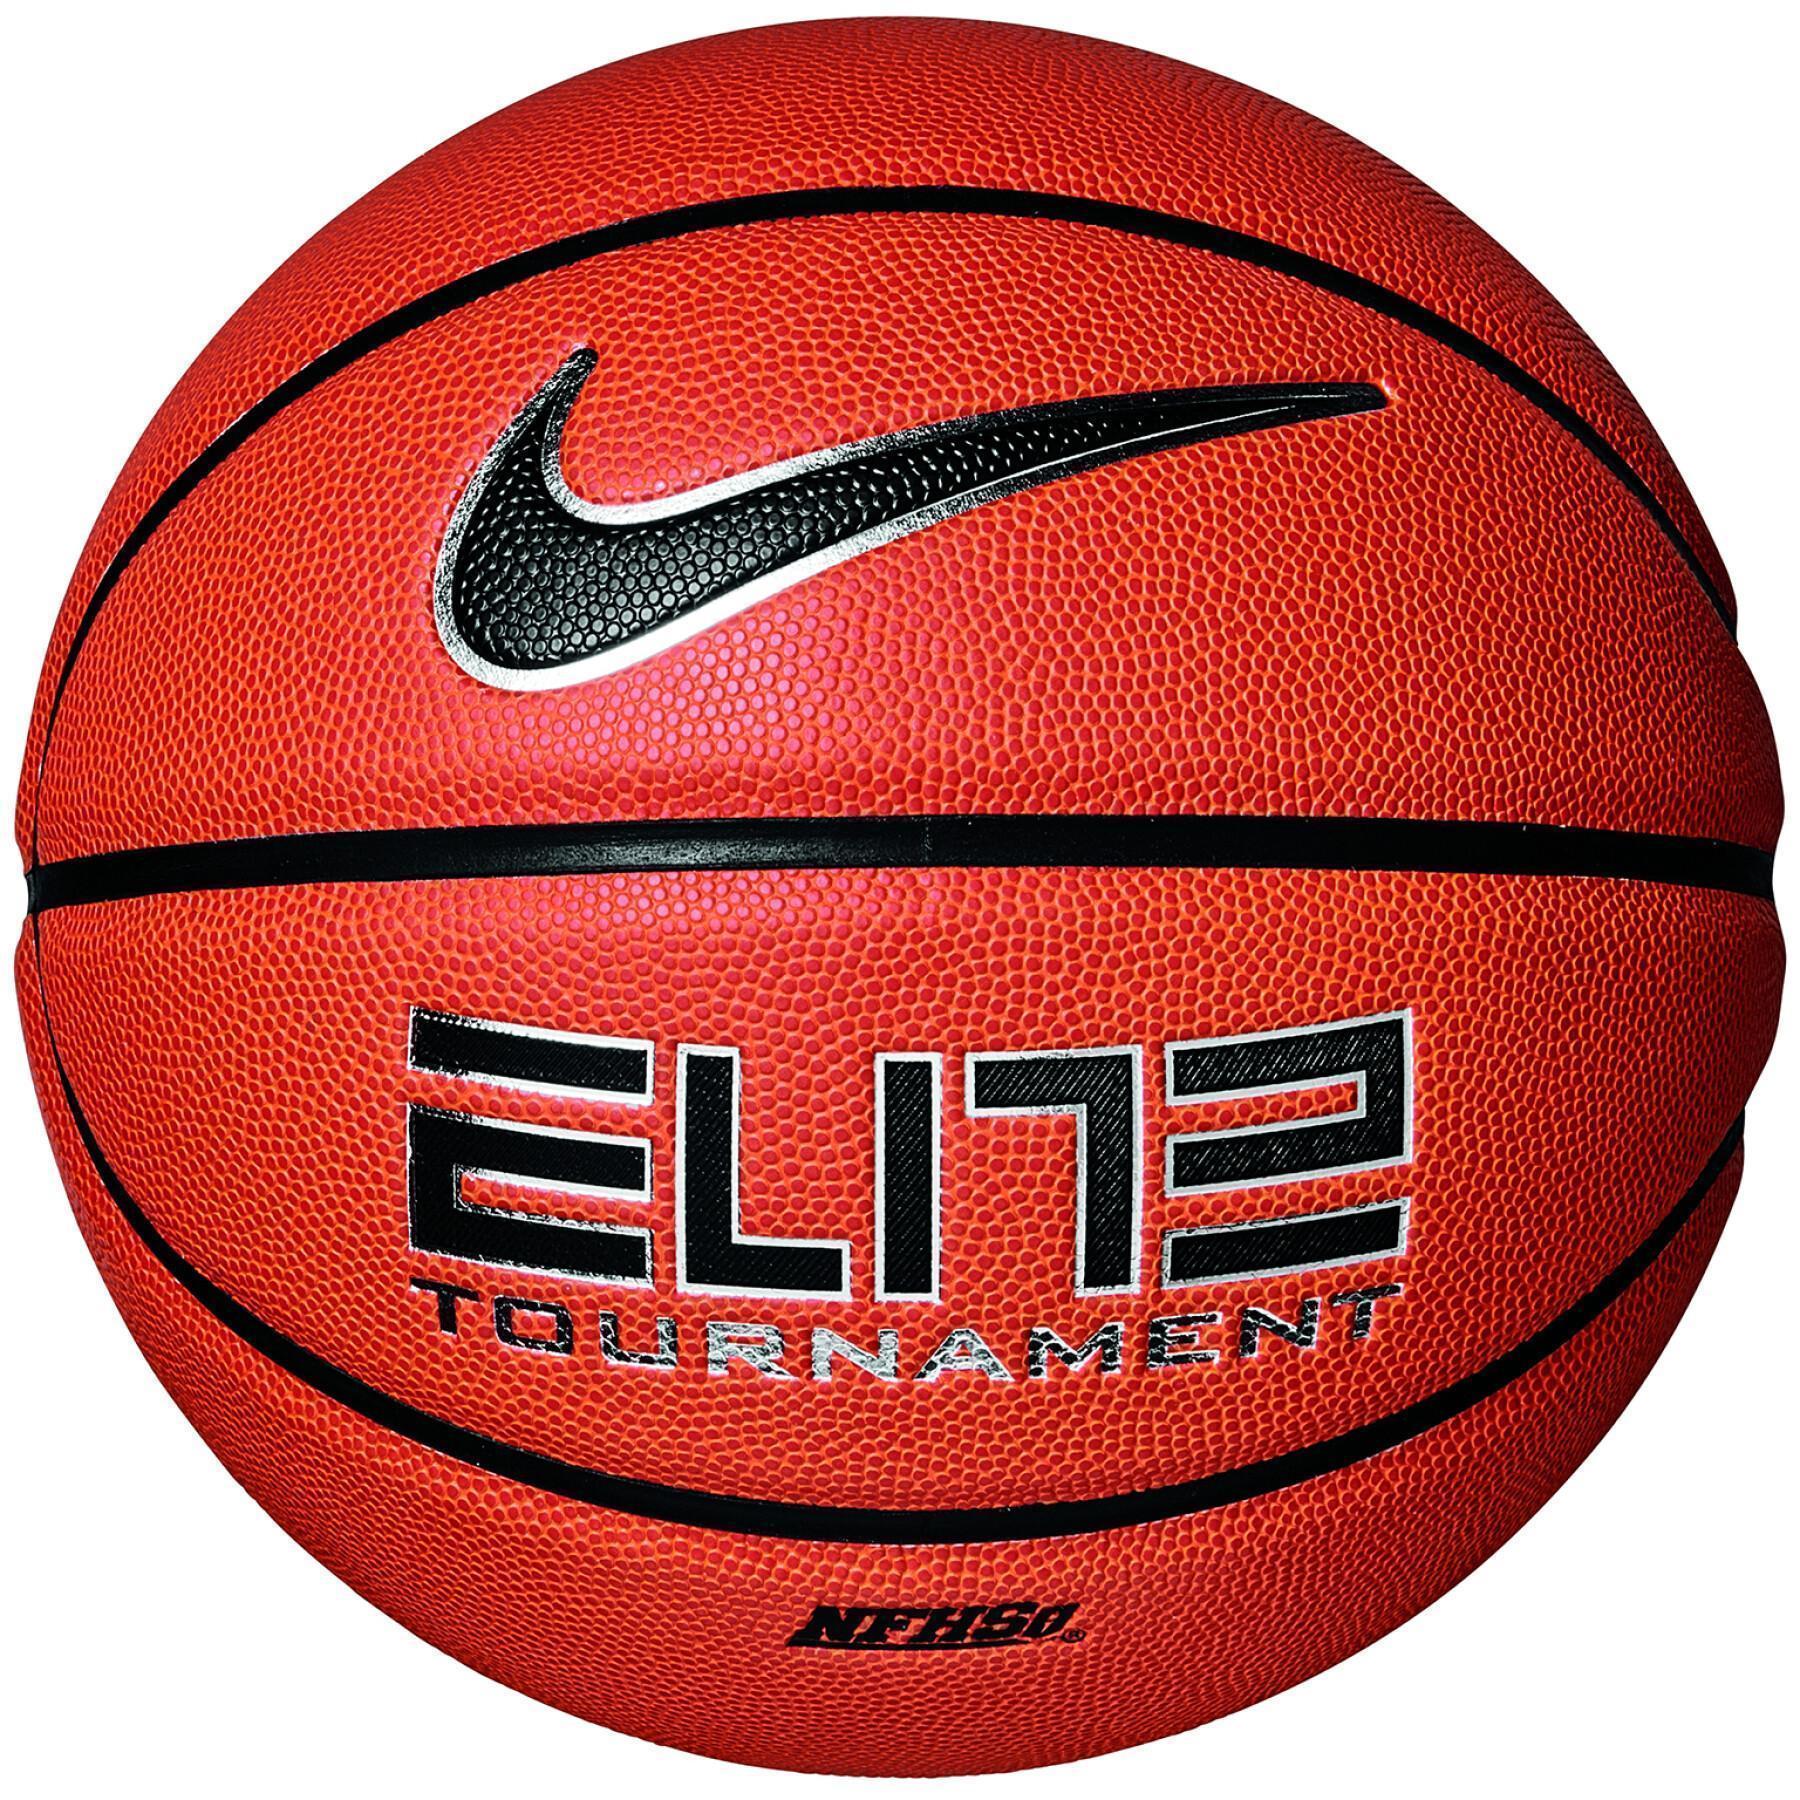 Ball Nike elite tournament 8p